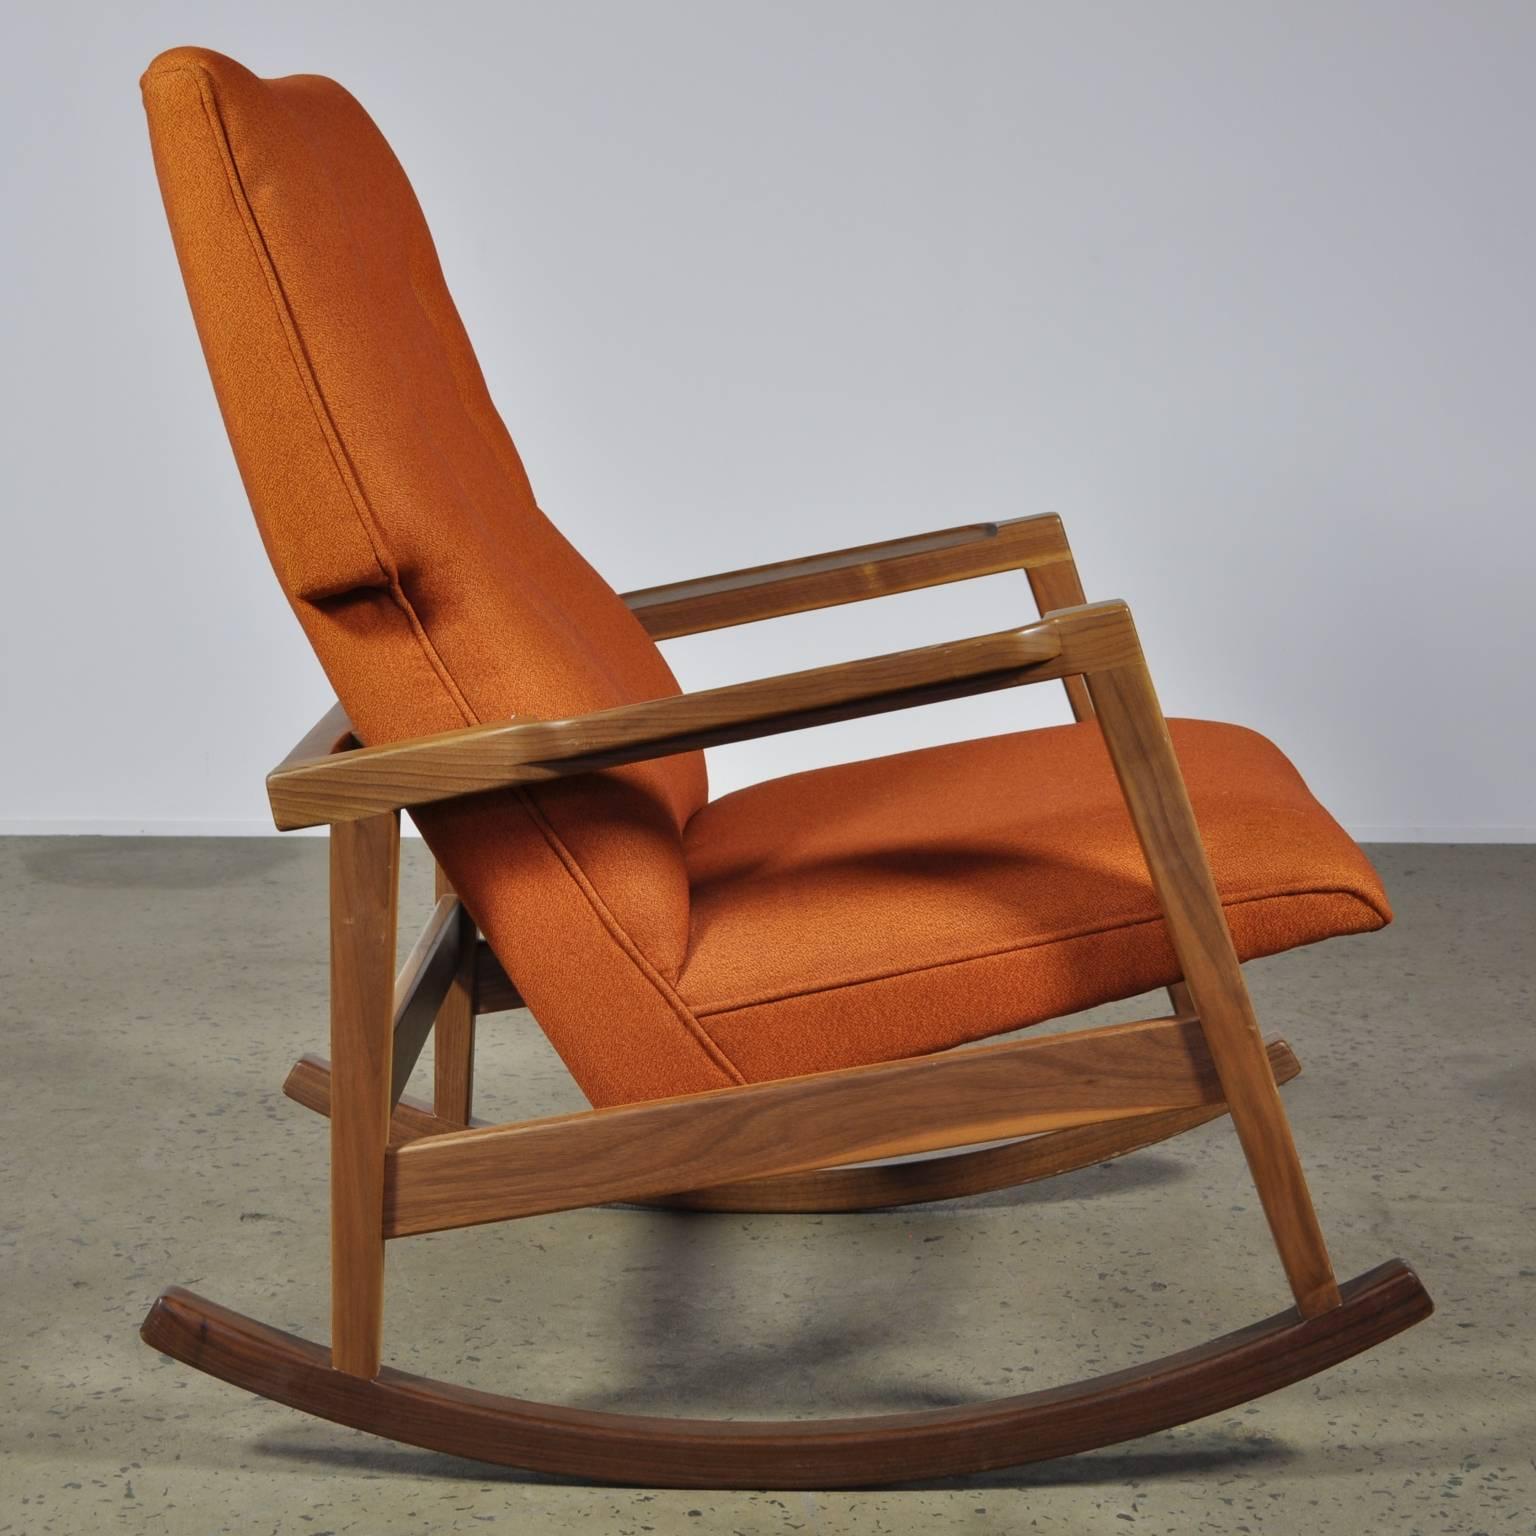 Walnut with Wool Fabric Jens Risom Rocker Chair for DWR (Skandinavische Moderne)